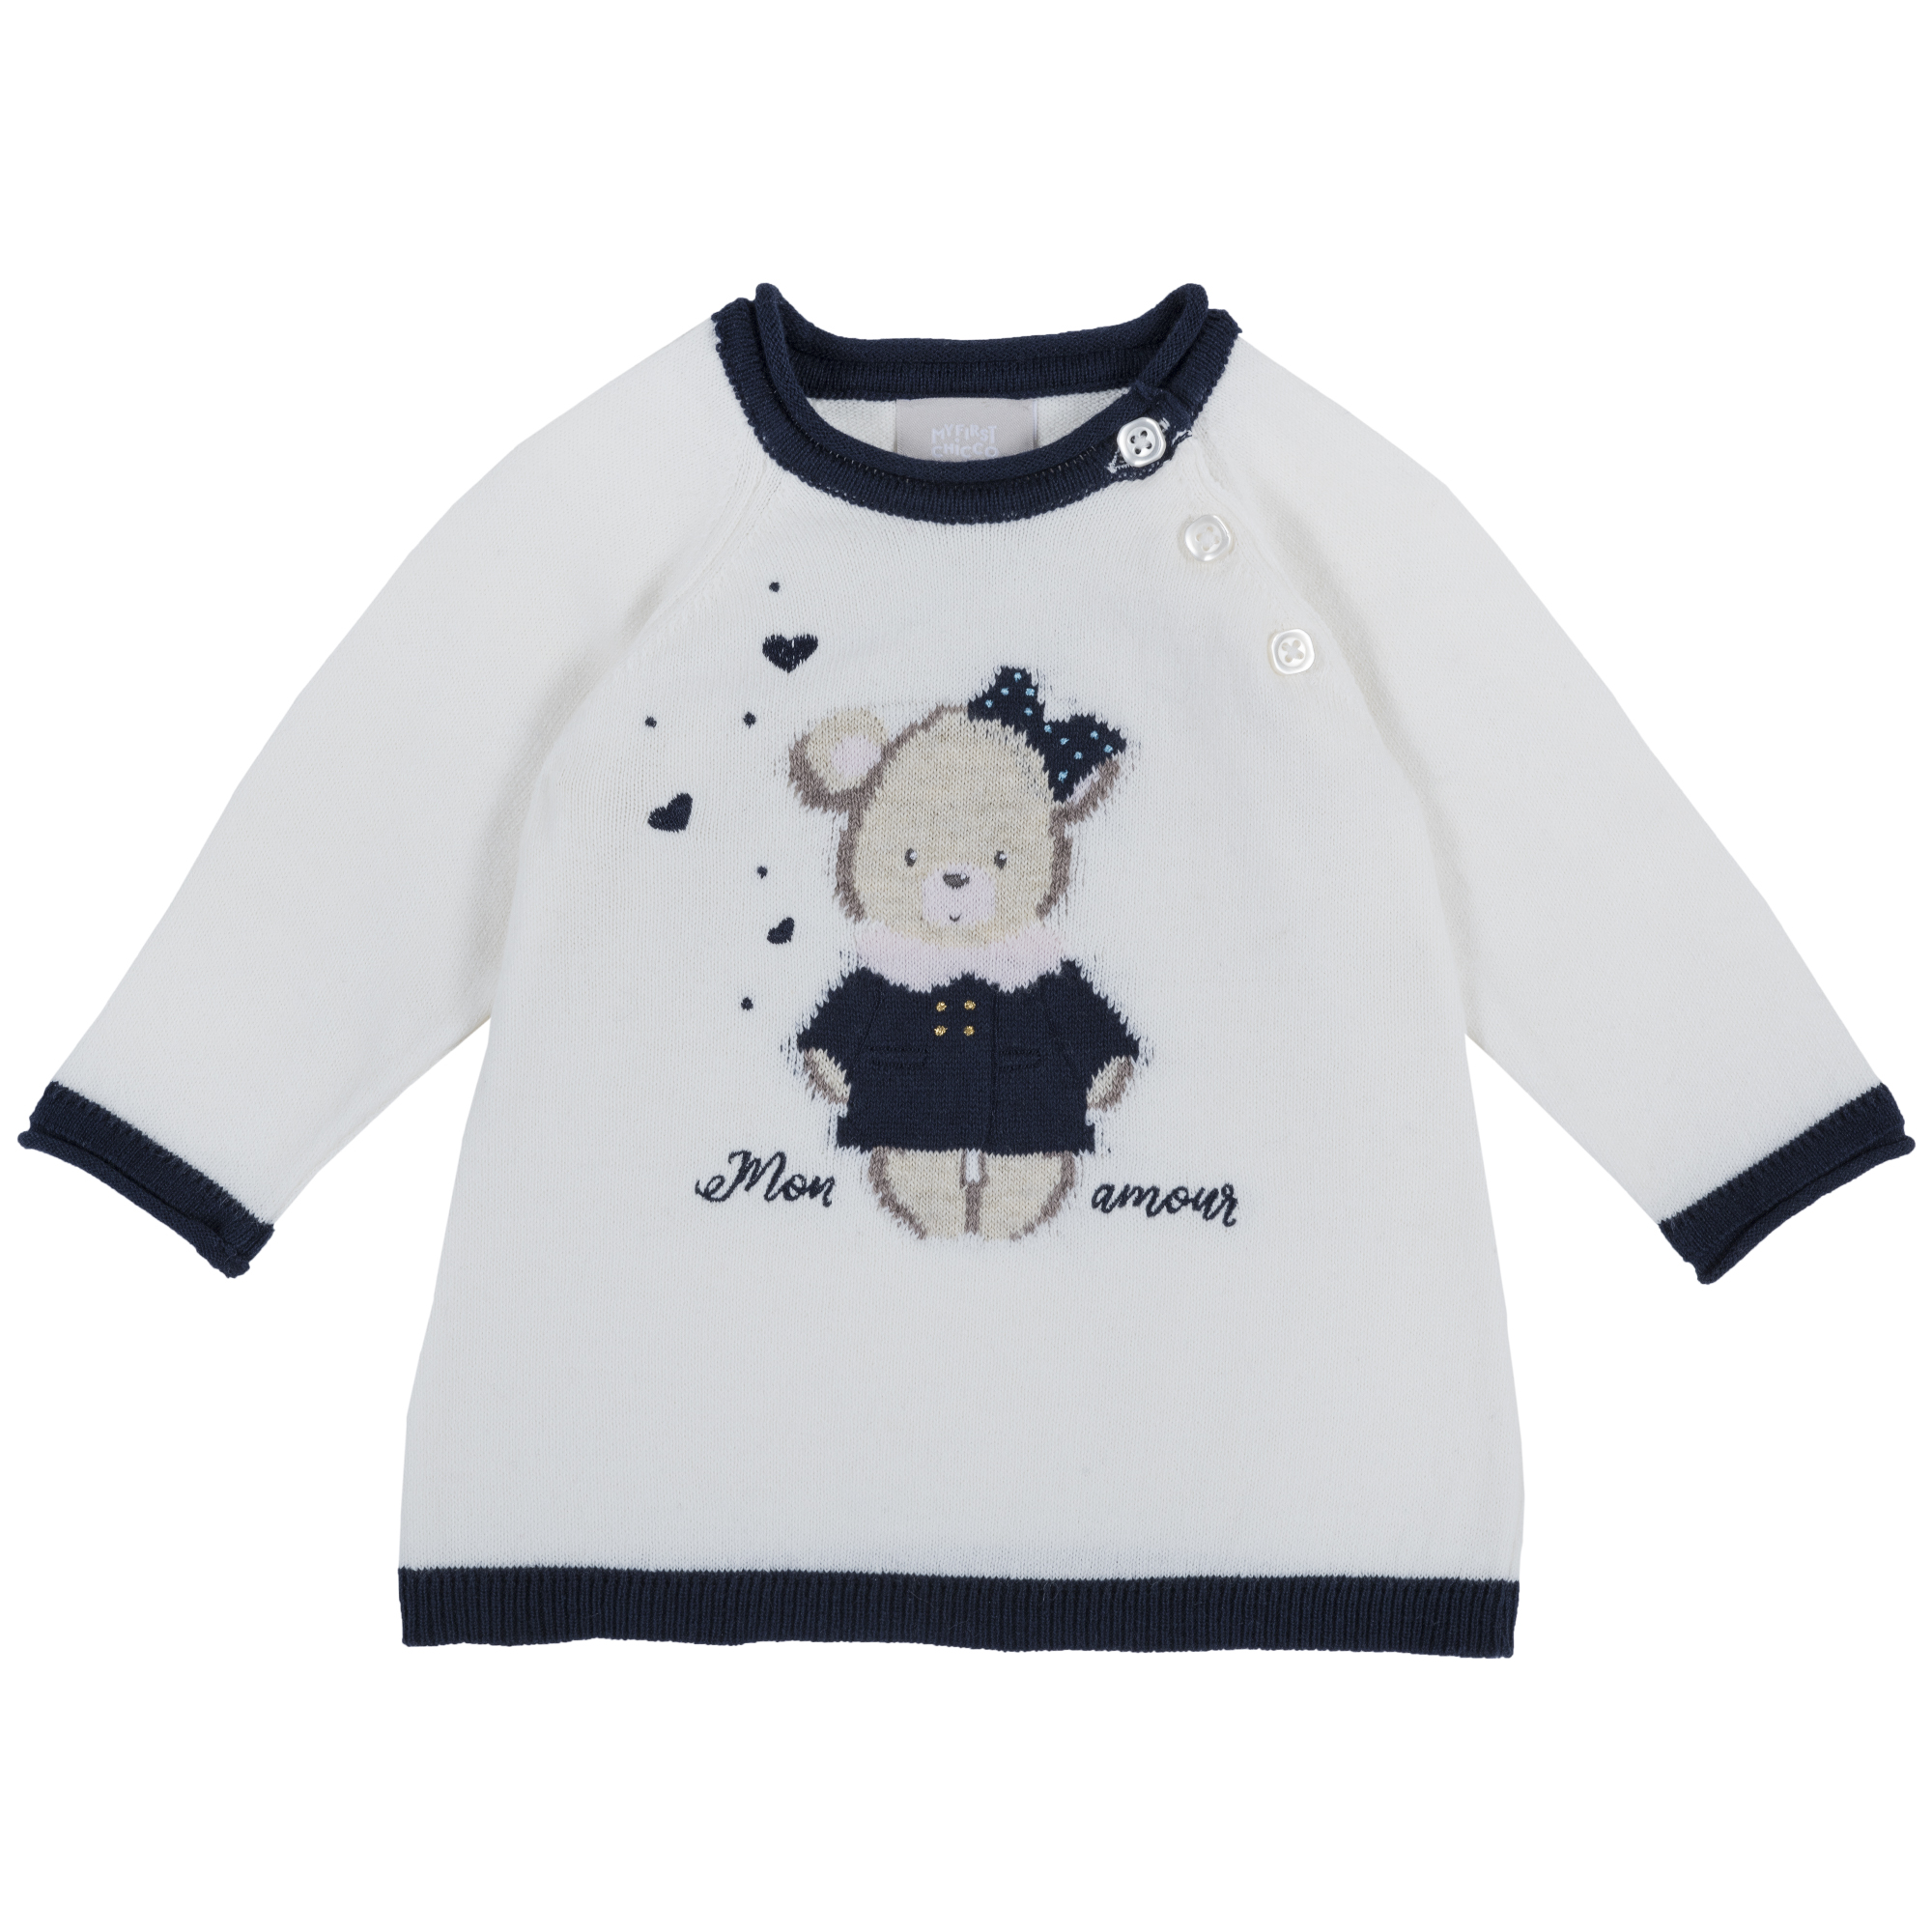 Rochie copii Chicco, tricotata, imprimeu ursulet, 03529 03529